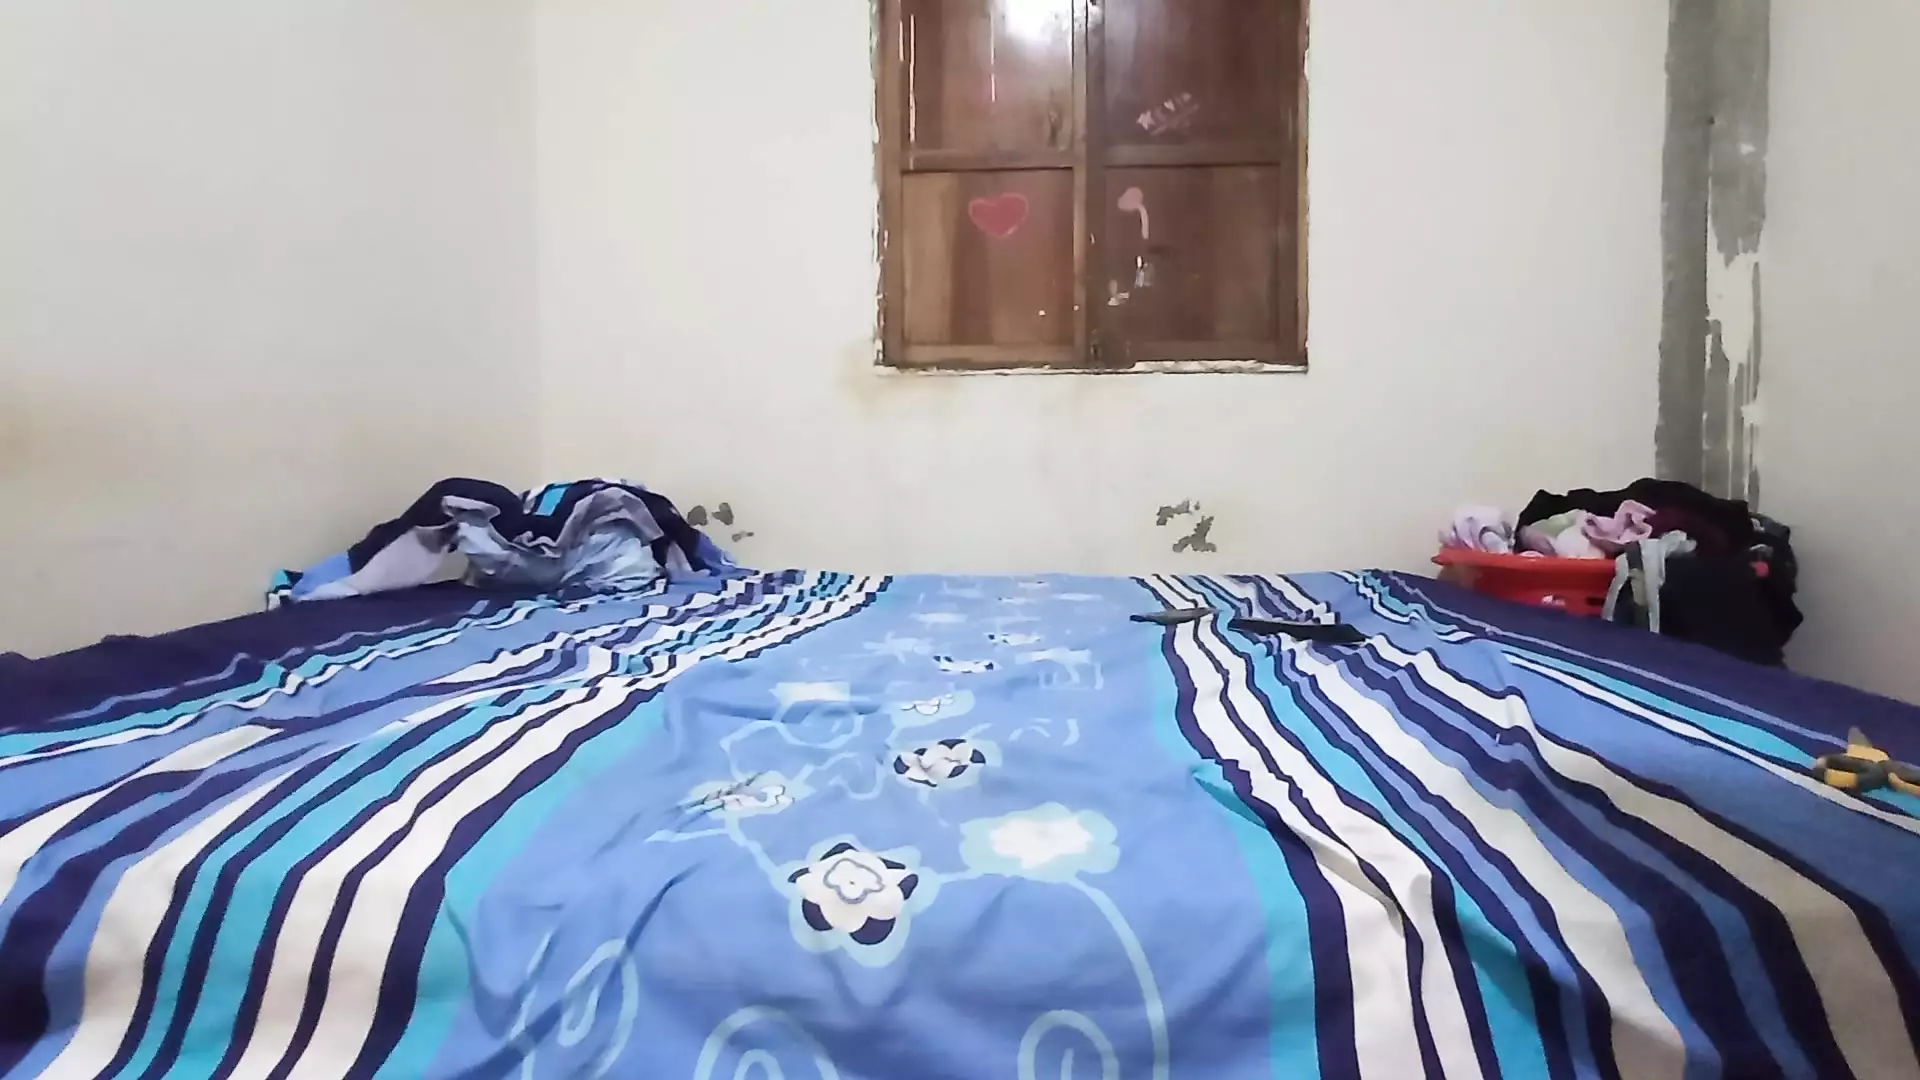 Garçon latino avec un coq noir se masturbe dans sa chambre xHamster image photo